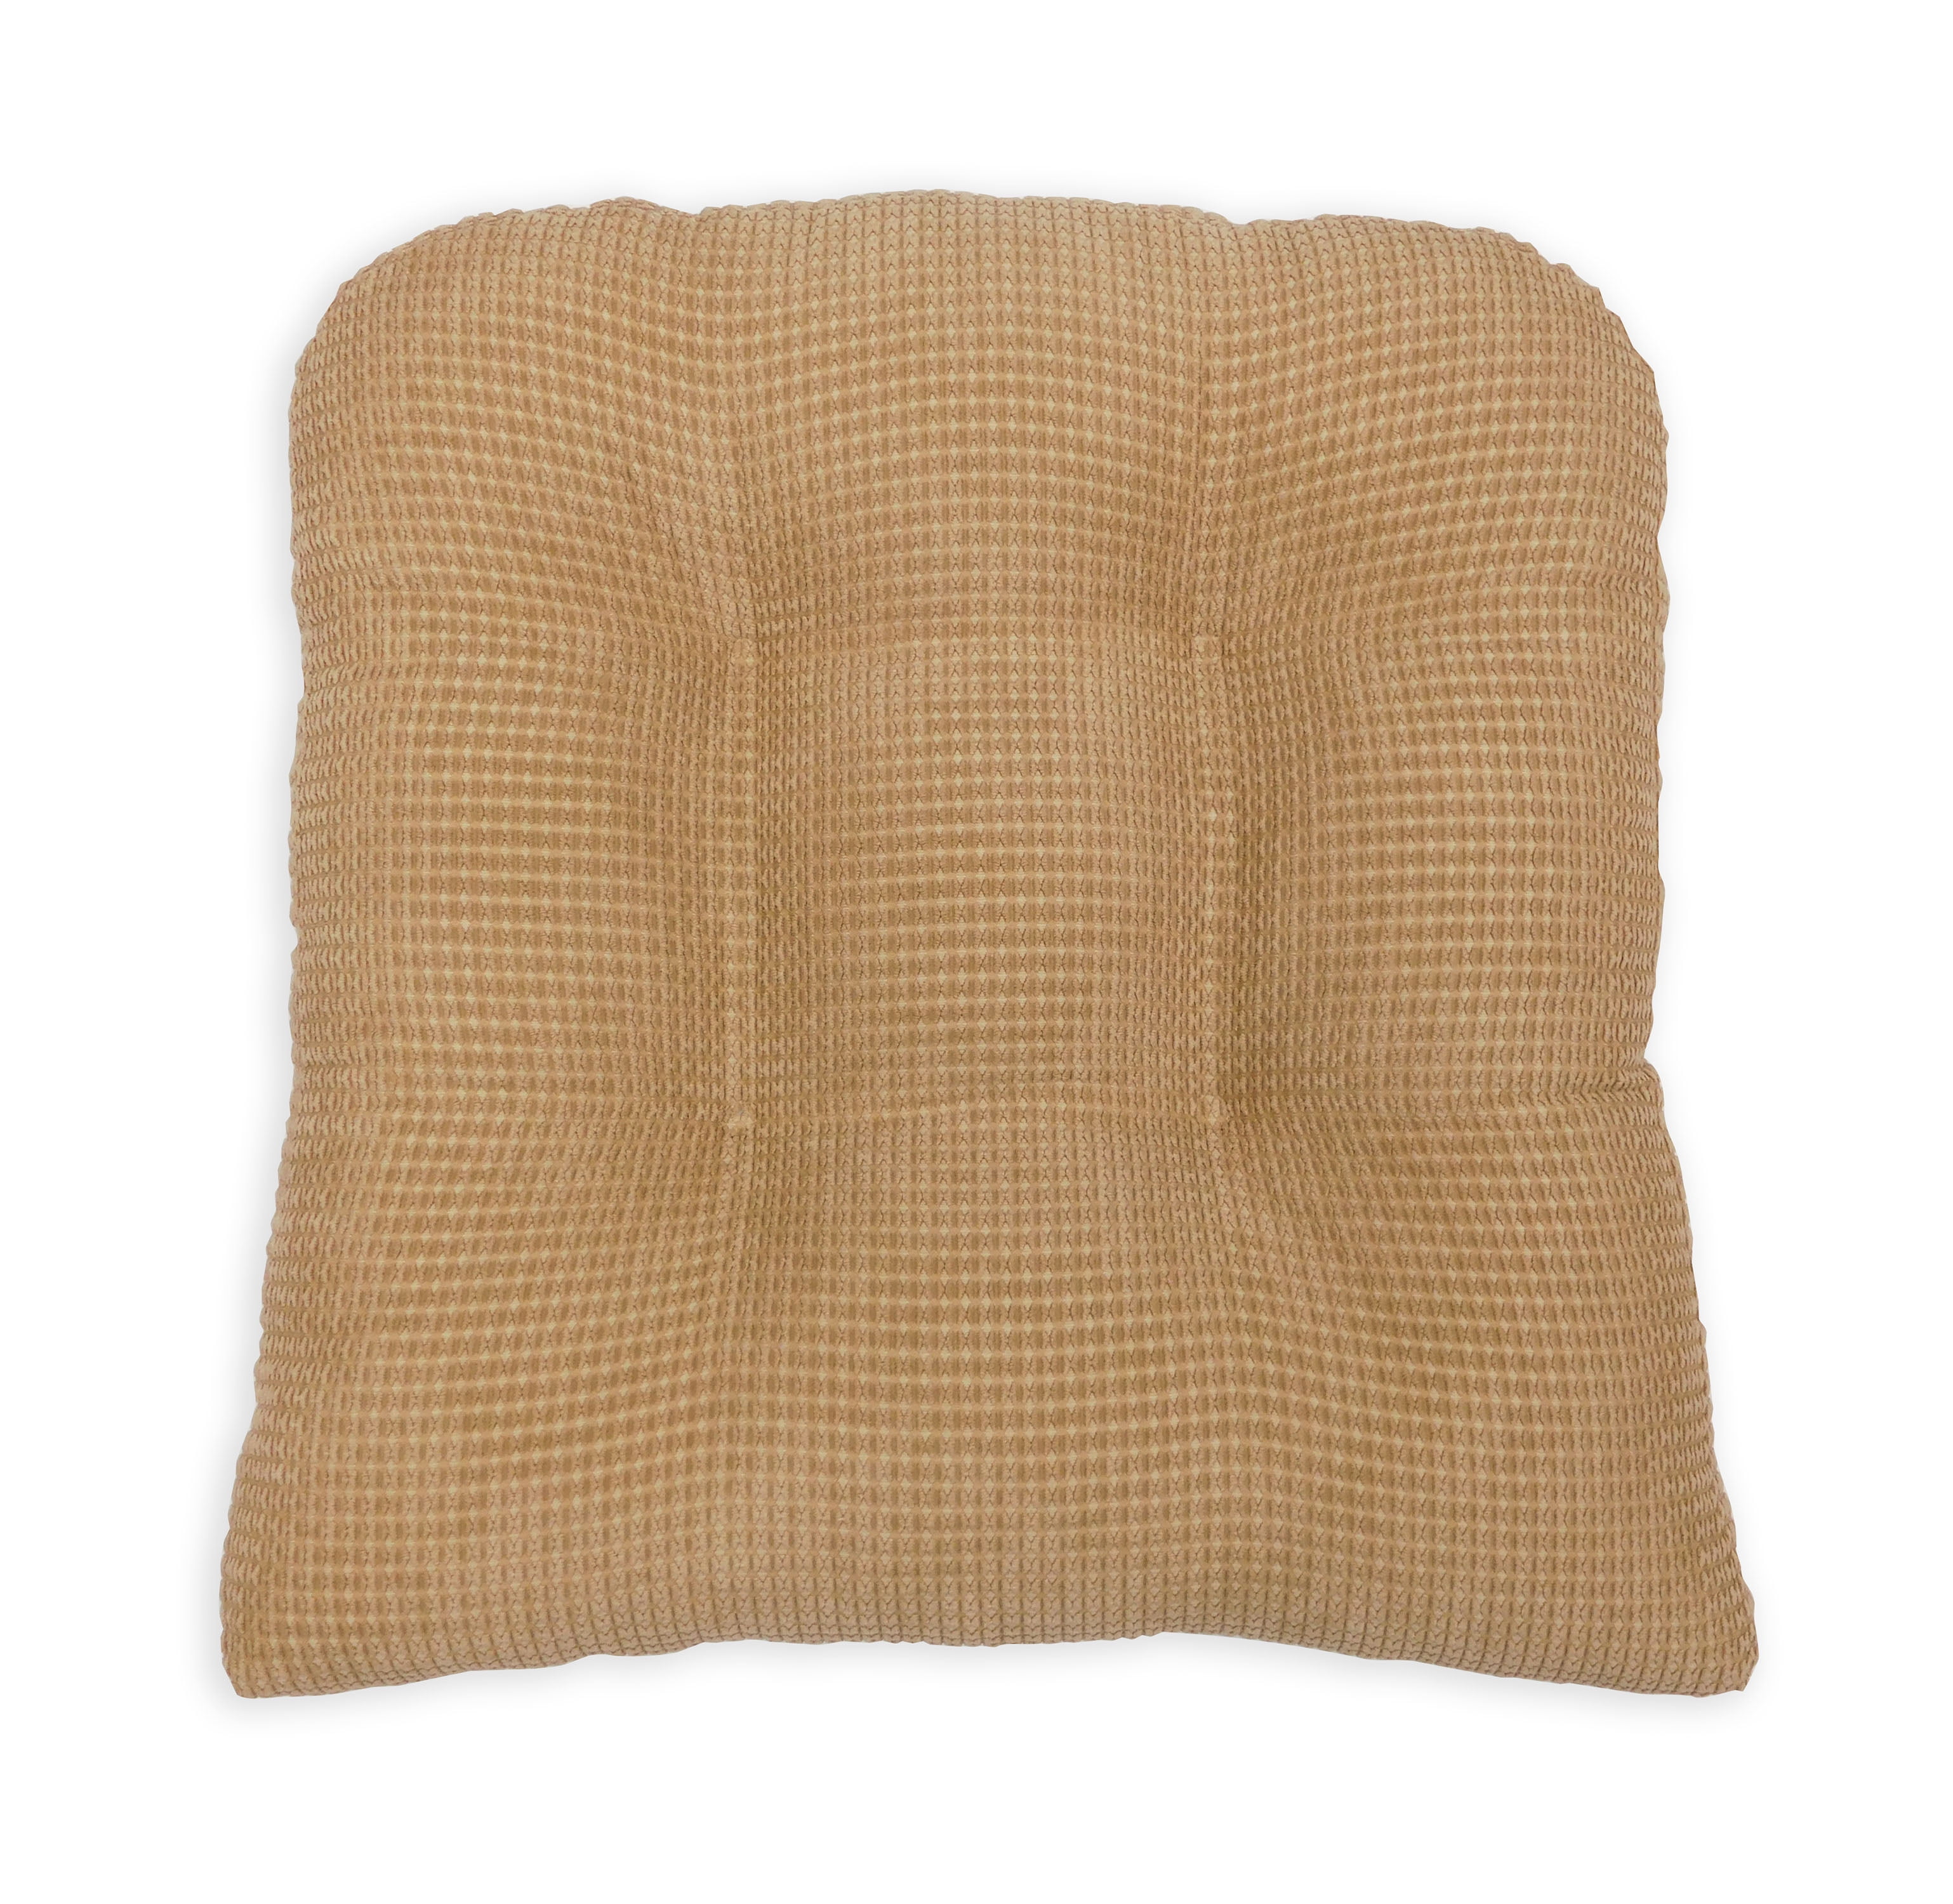 Miracle Bamboo Grey Seat Cushion - 2 Pack